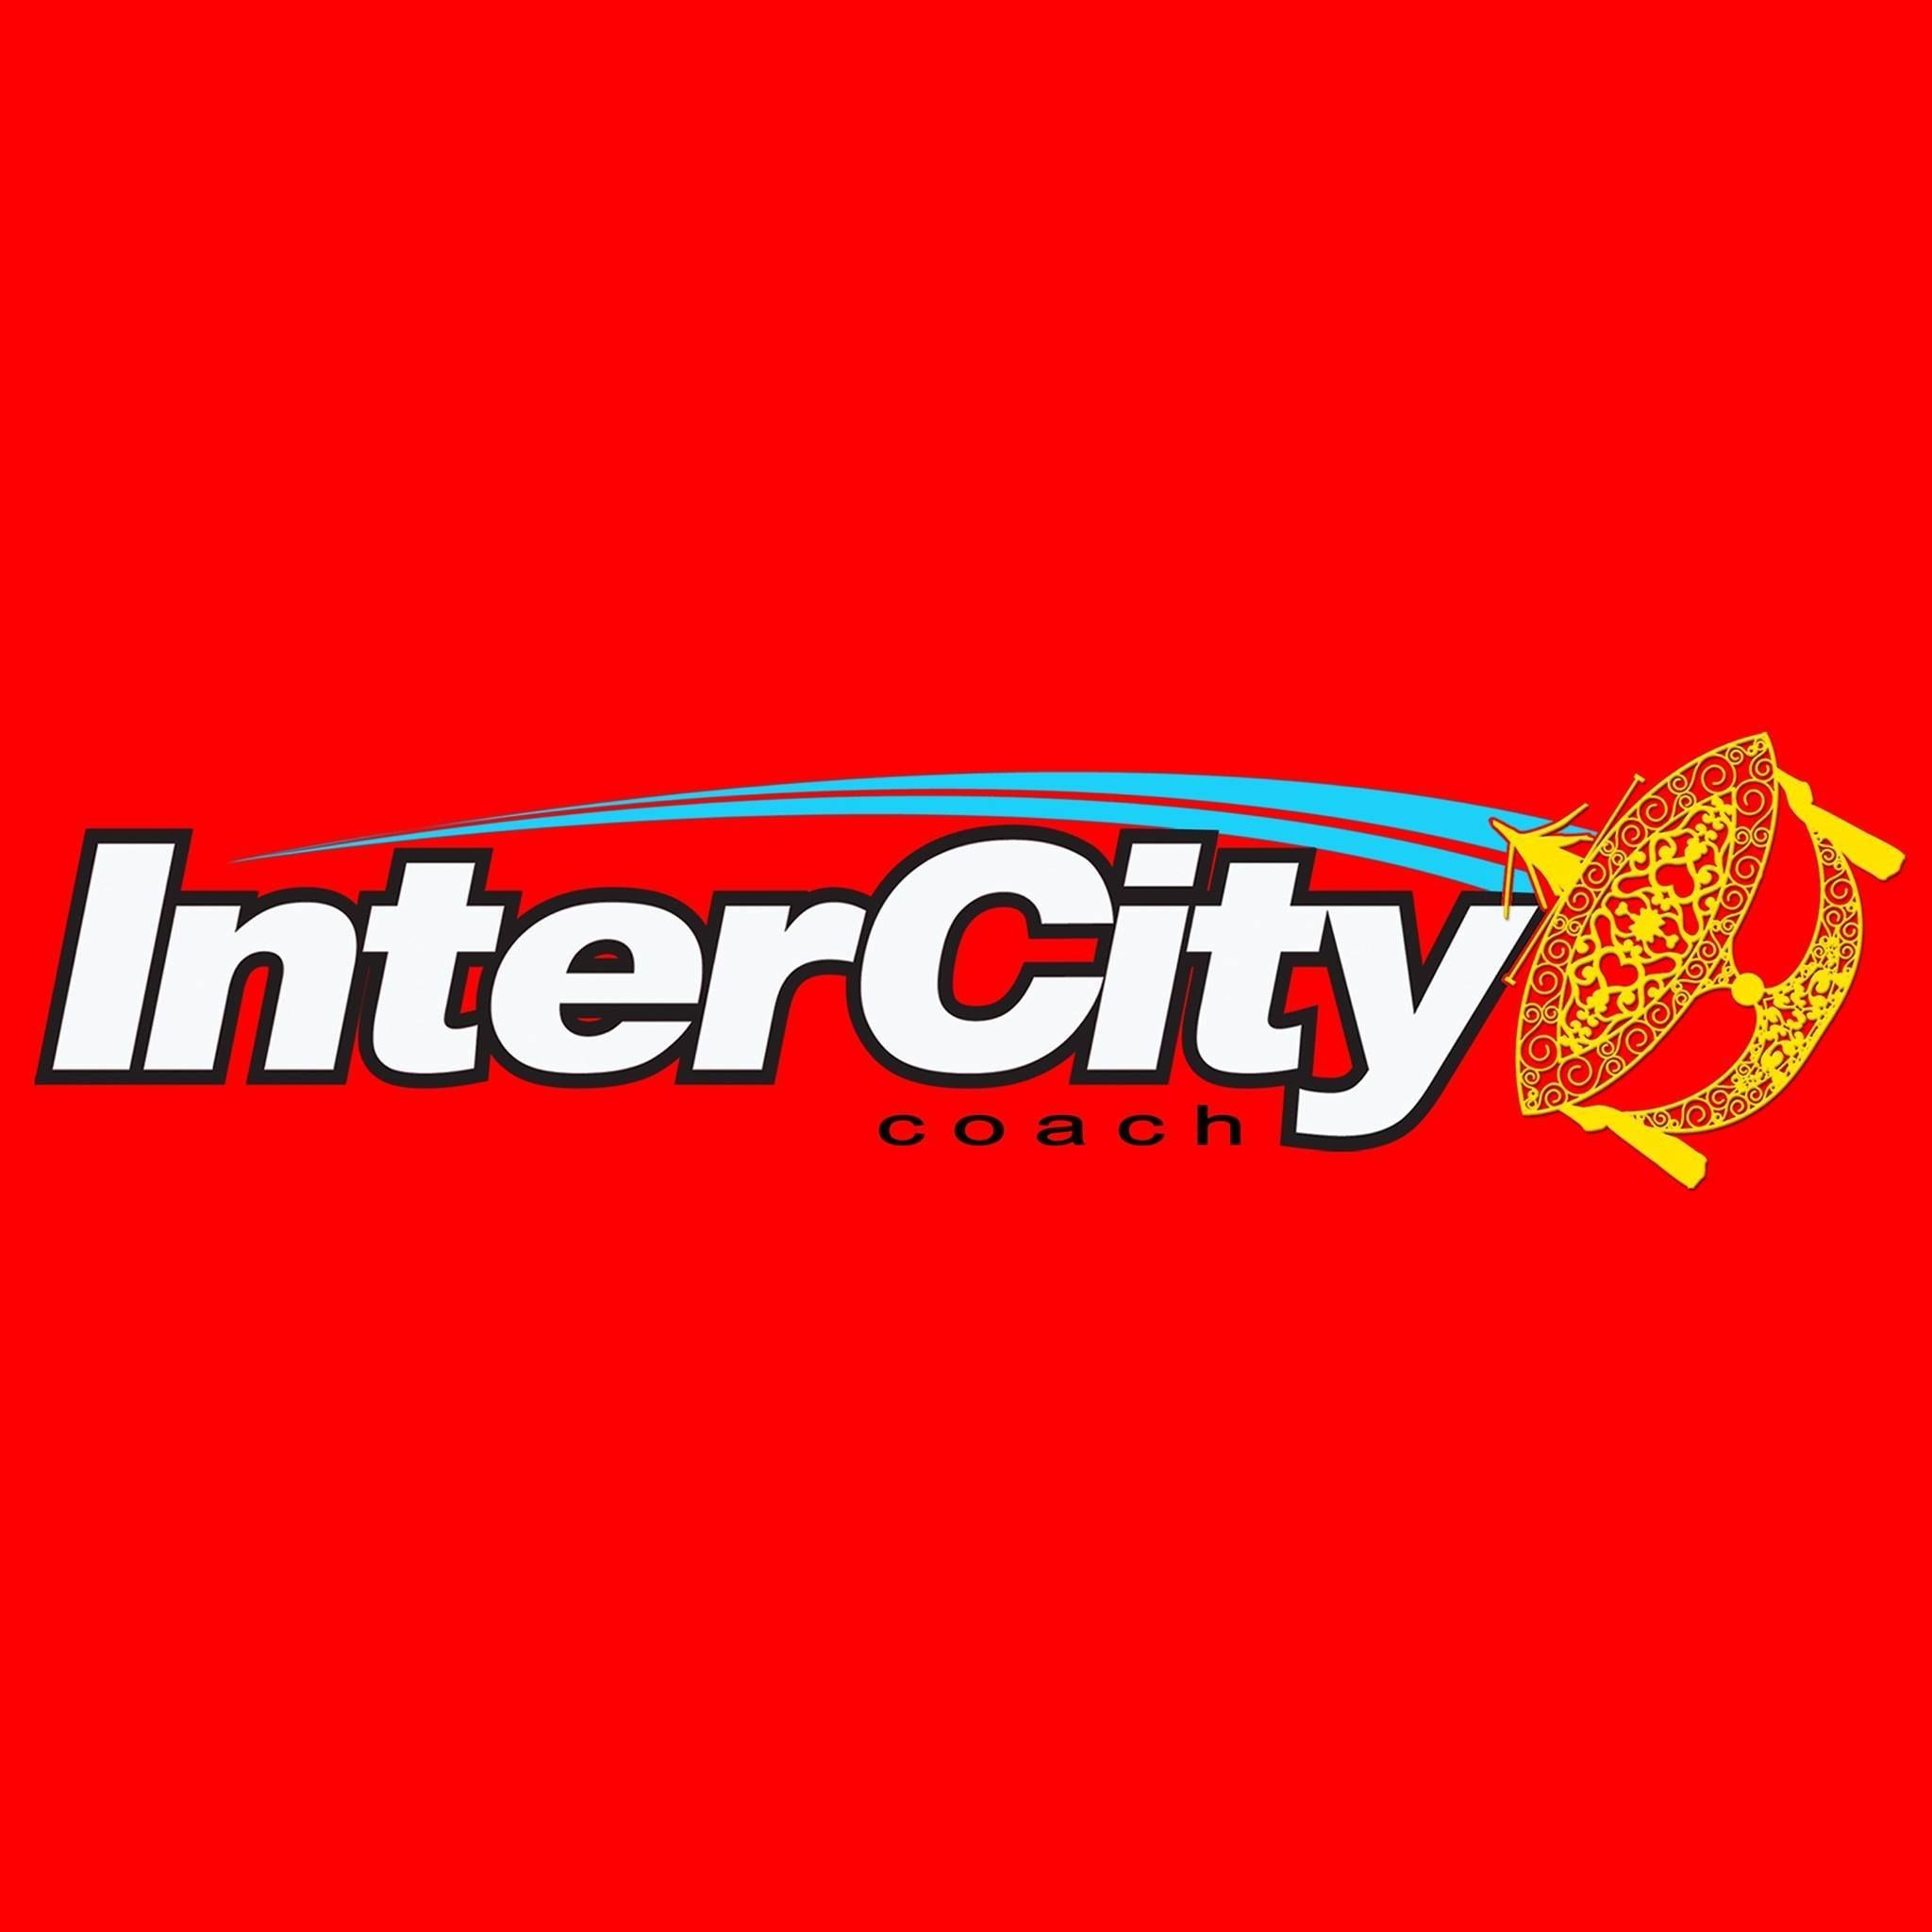 Intercity Coach logo